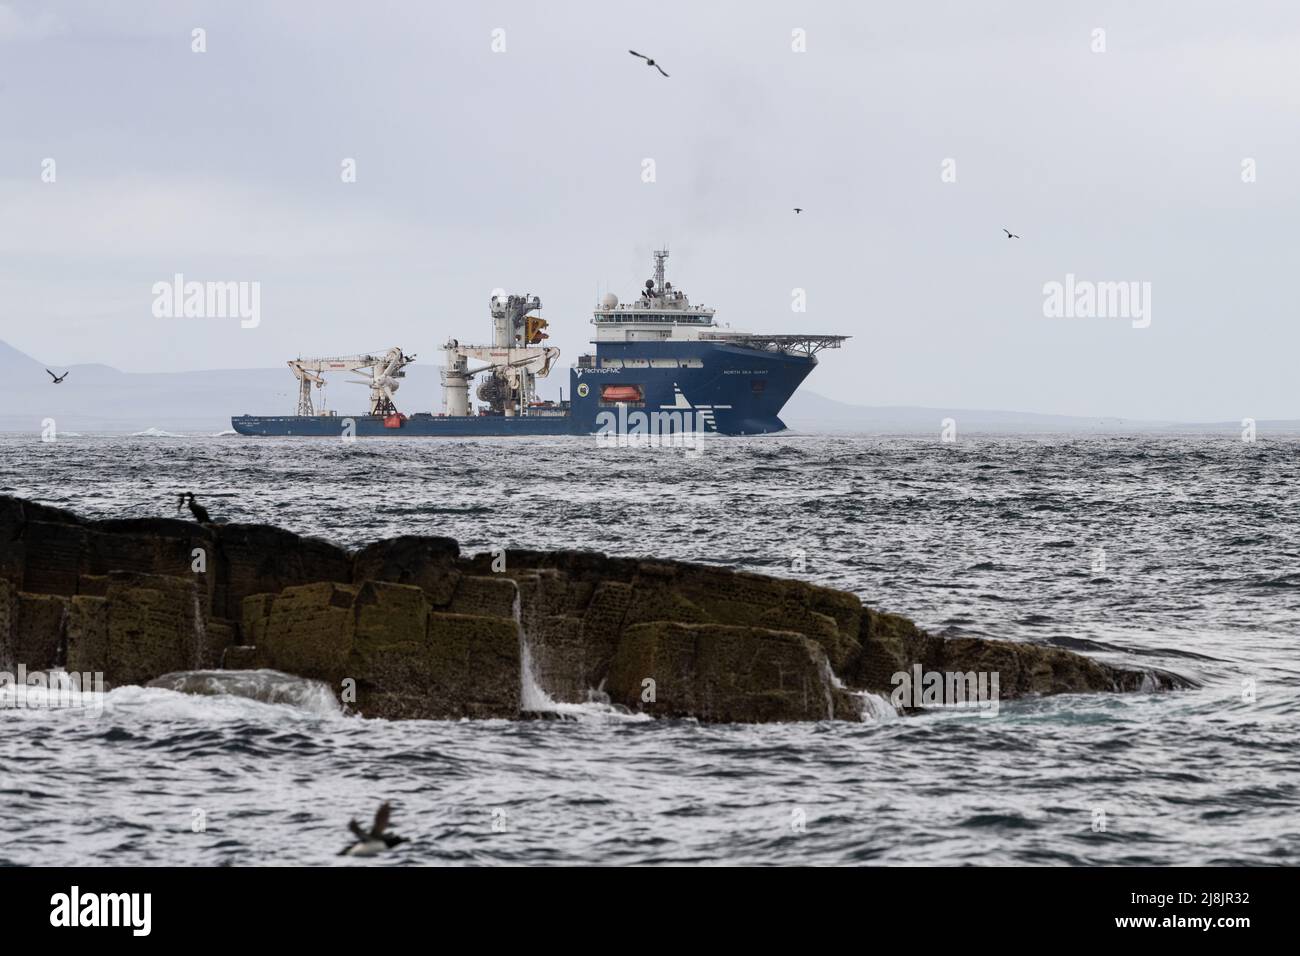 TechnipFMC North Sea Giant subsea construction vessel in the Pentland Firth, Scotland, UK Stock Photo